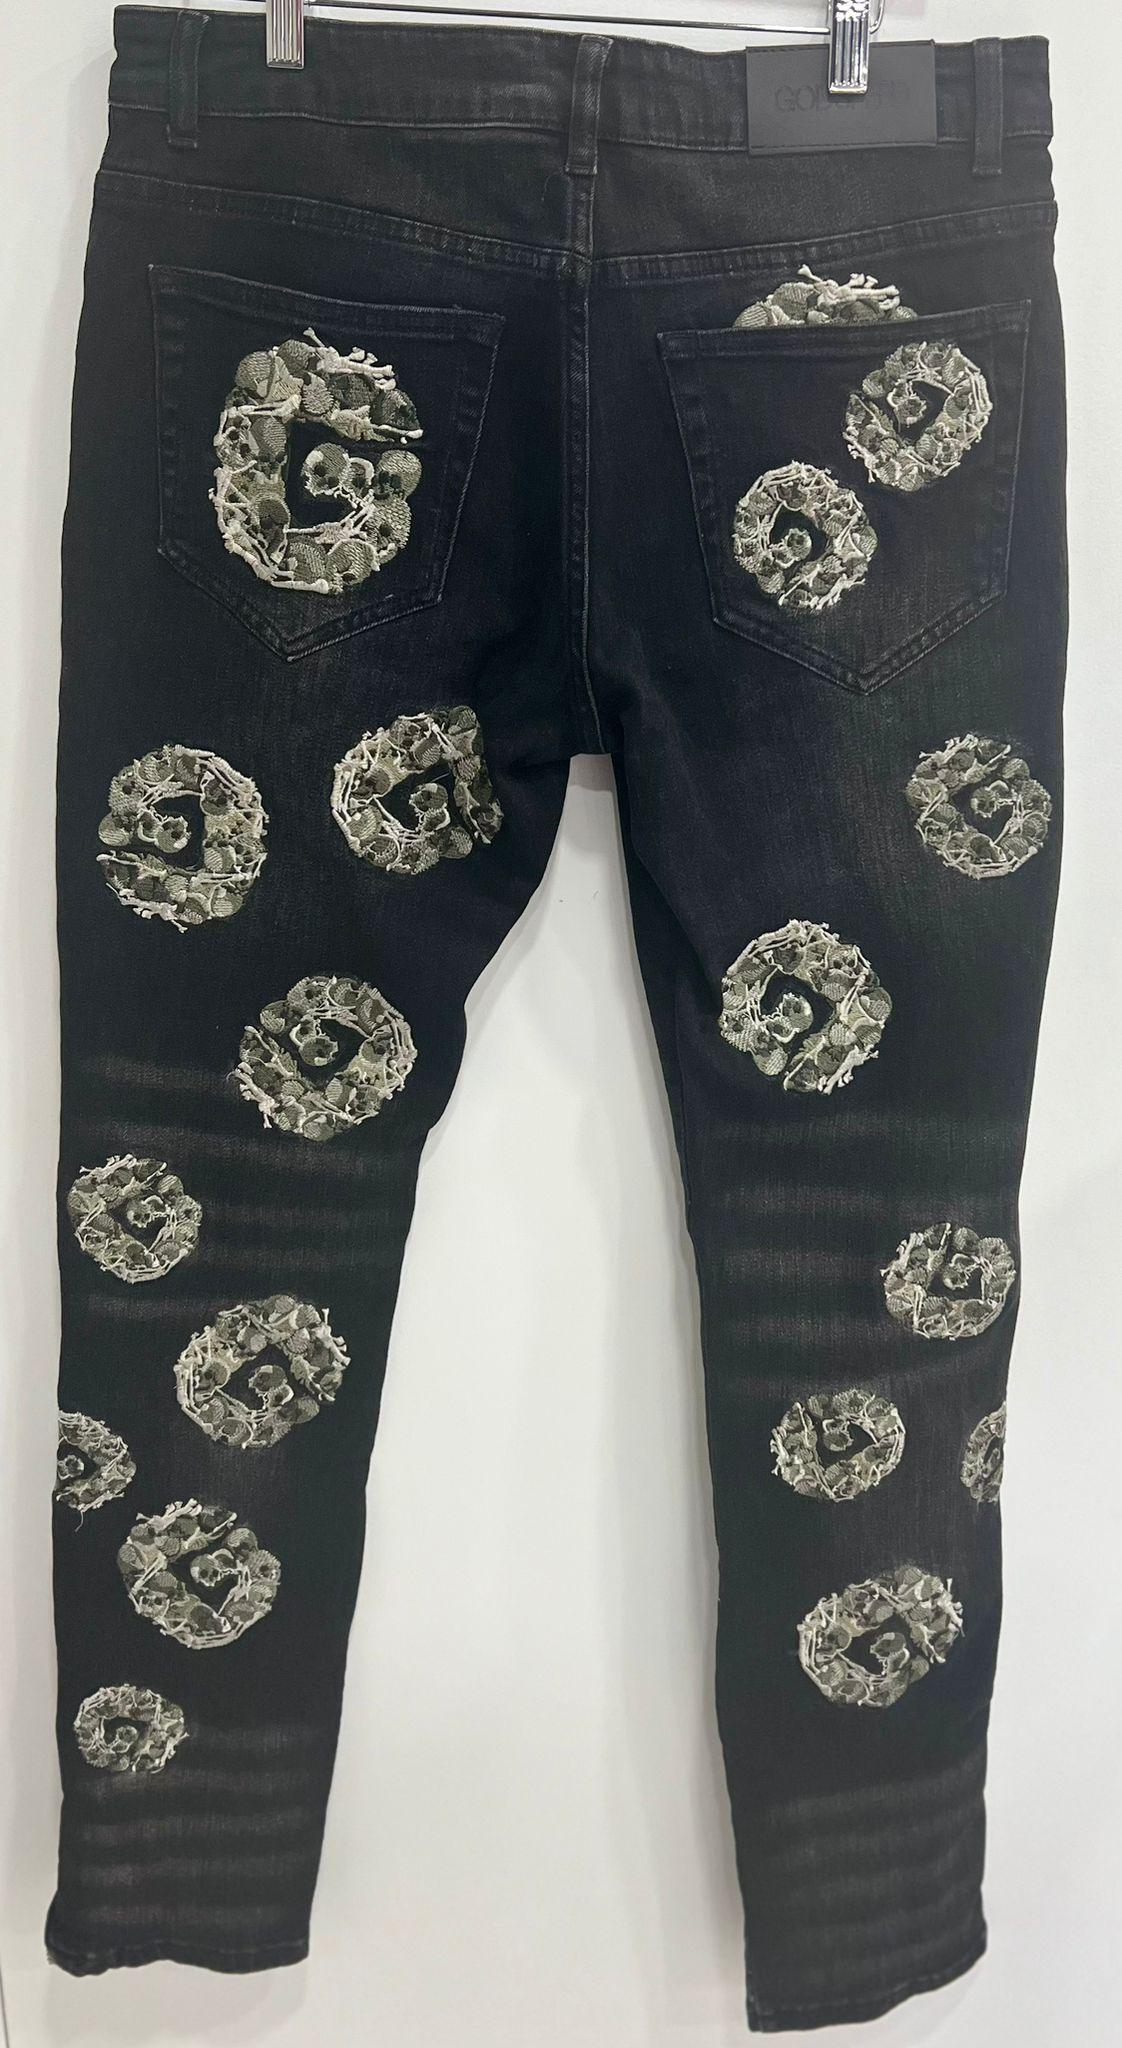 Godspeed Skull embroidery jeans (Black) - Gravity NYC